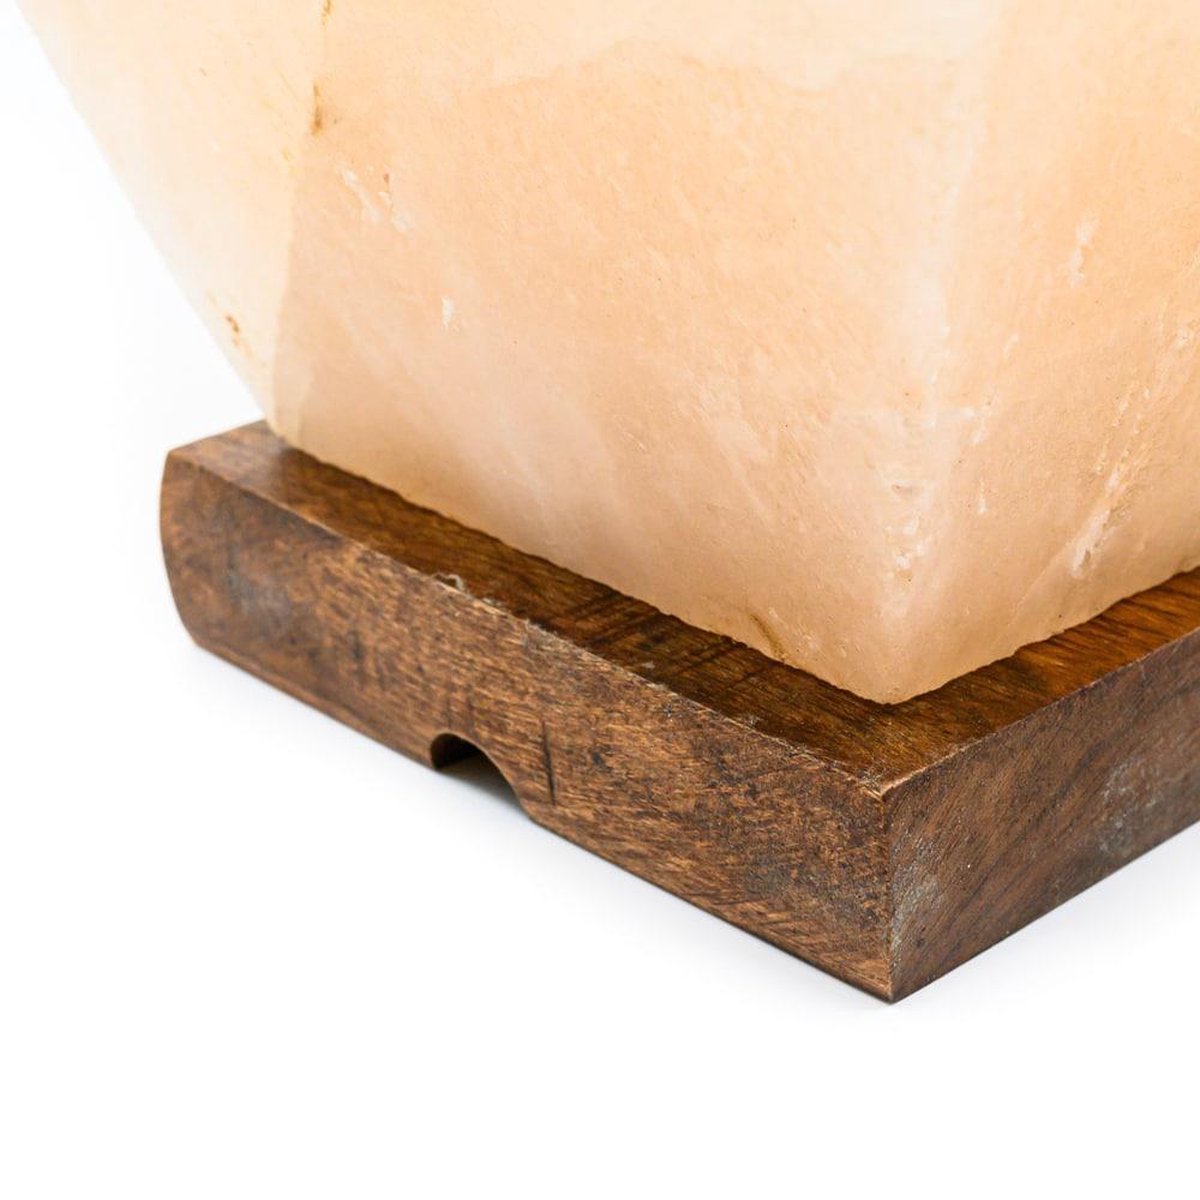 Brasero de lampe en pierre de sel de l' Himalaya avec pièces brutes